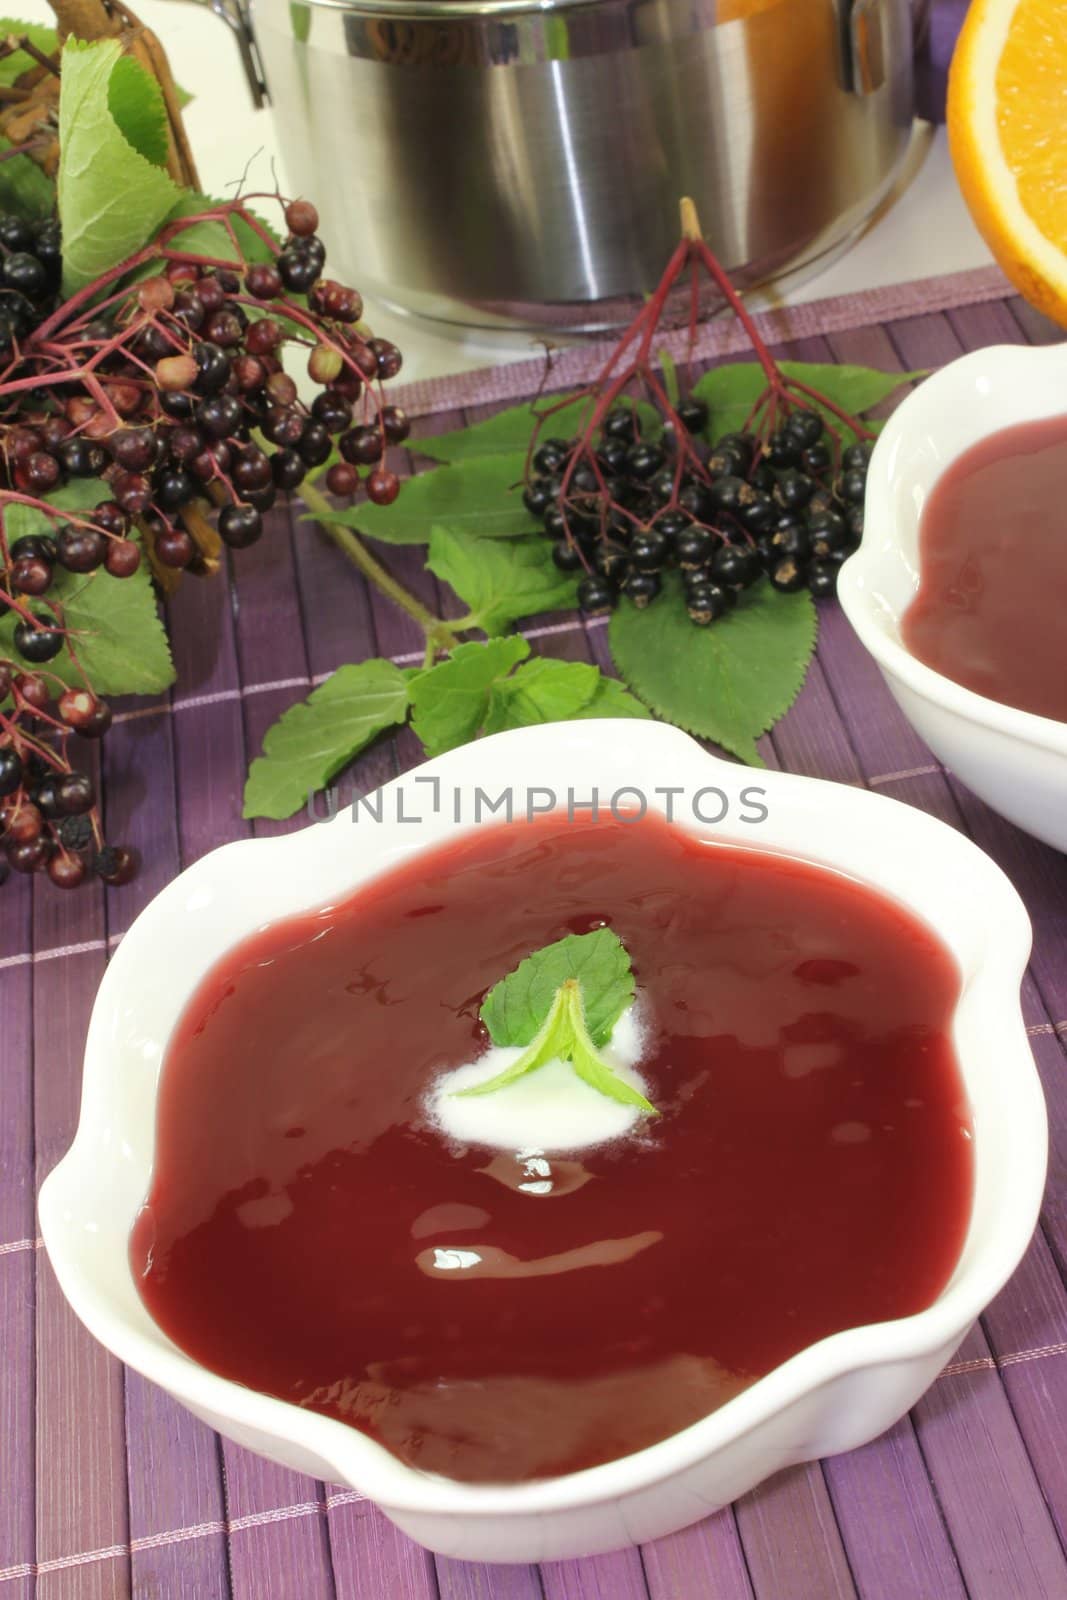 Elderberry soup by silencefoto